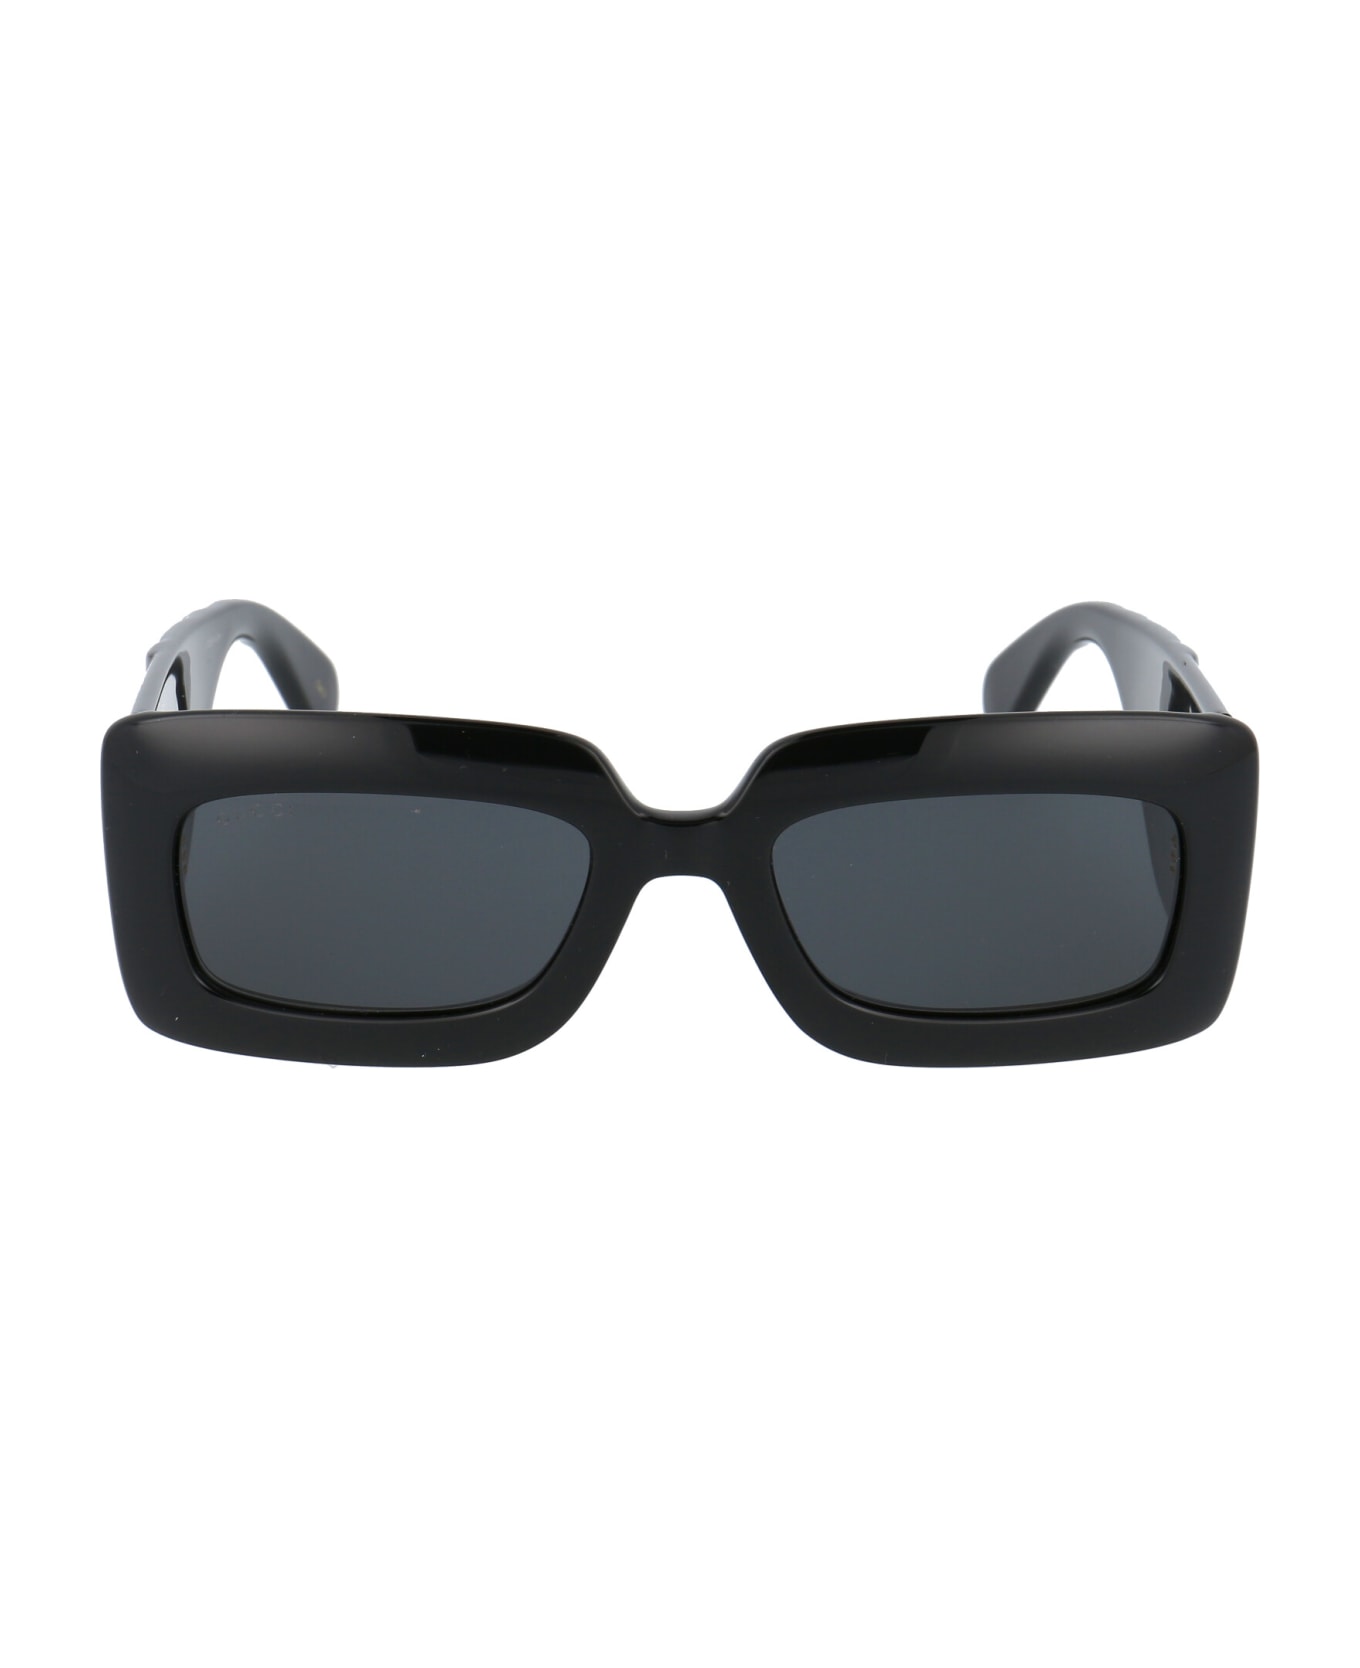 Gucci Eyewear Gg0811s Sunglasses - 001 BLACK BLACK GREY